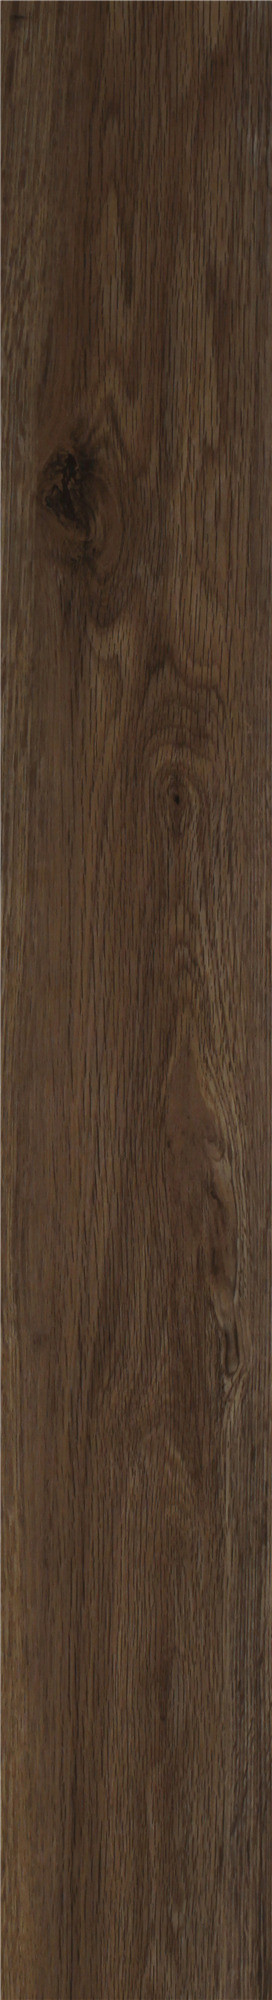 Hanflor Brown Click Vinyl Plank LVT Wood Flooring Low maintenance Easy Click 9''x48'' 4.0mm HIF 20483